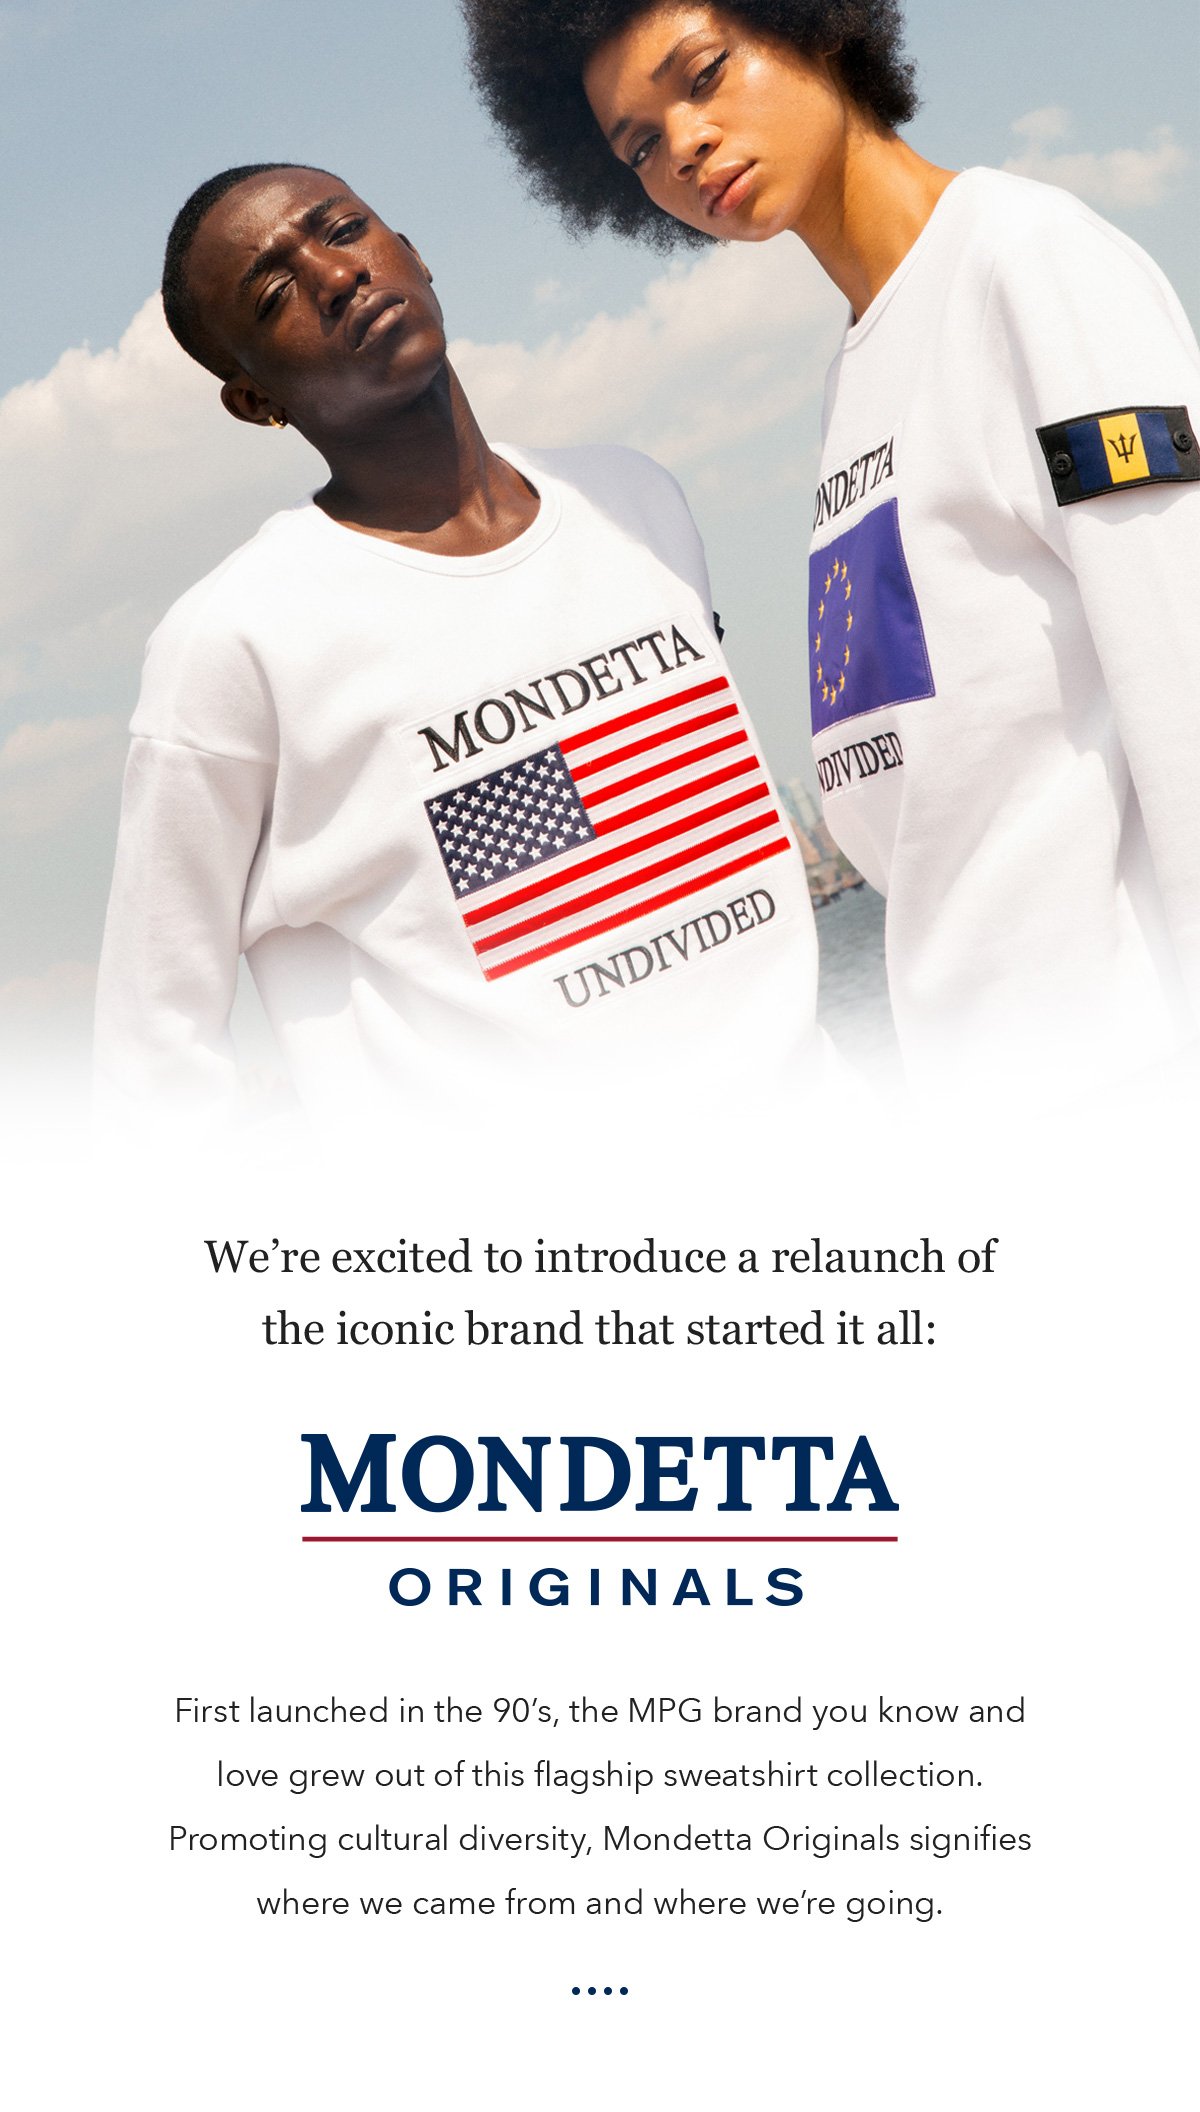 MPG Sport: Introducing Mondetta Originals, Our Brand Revival